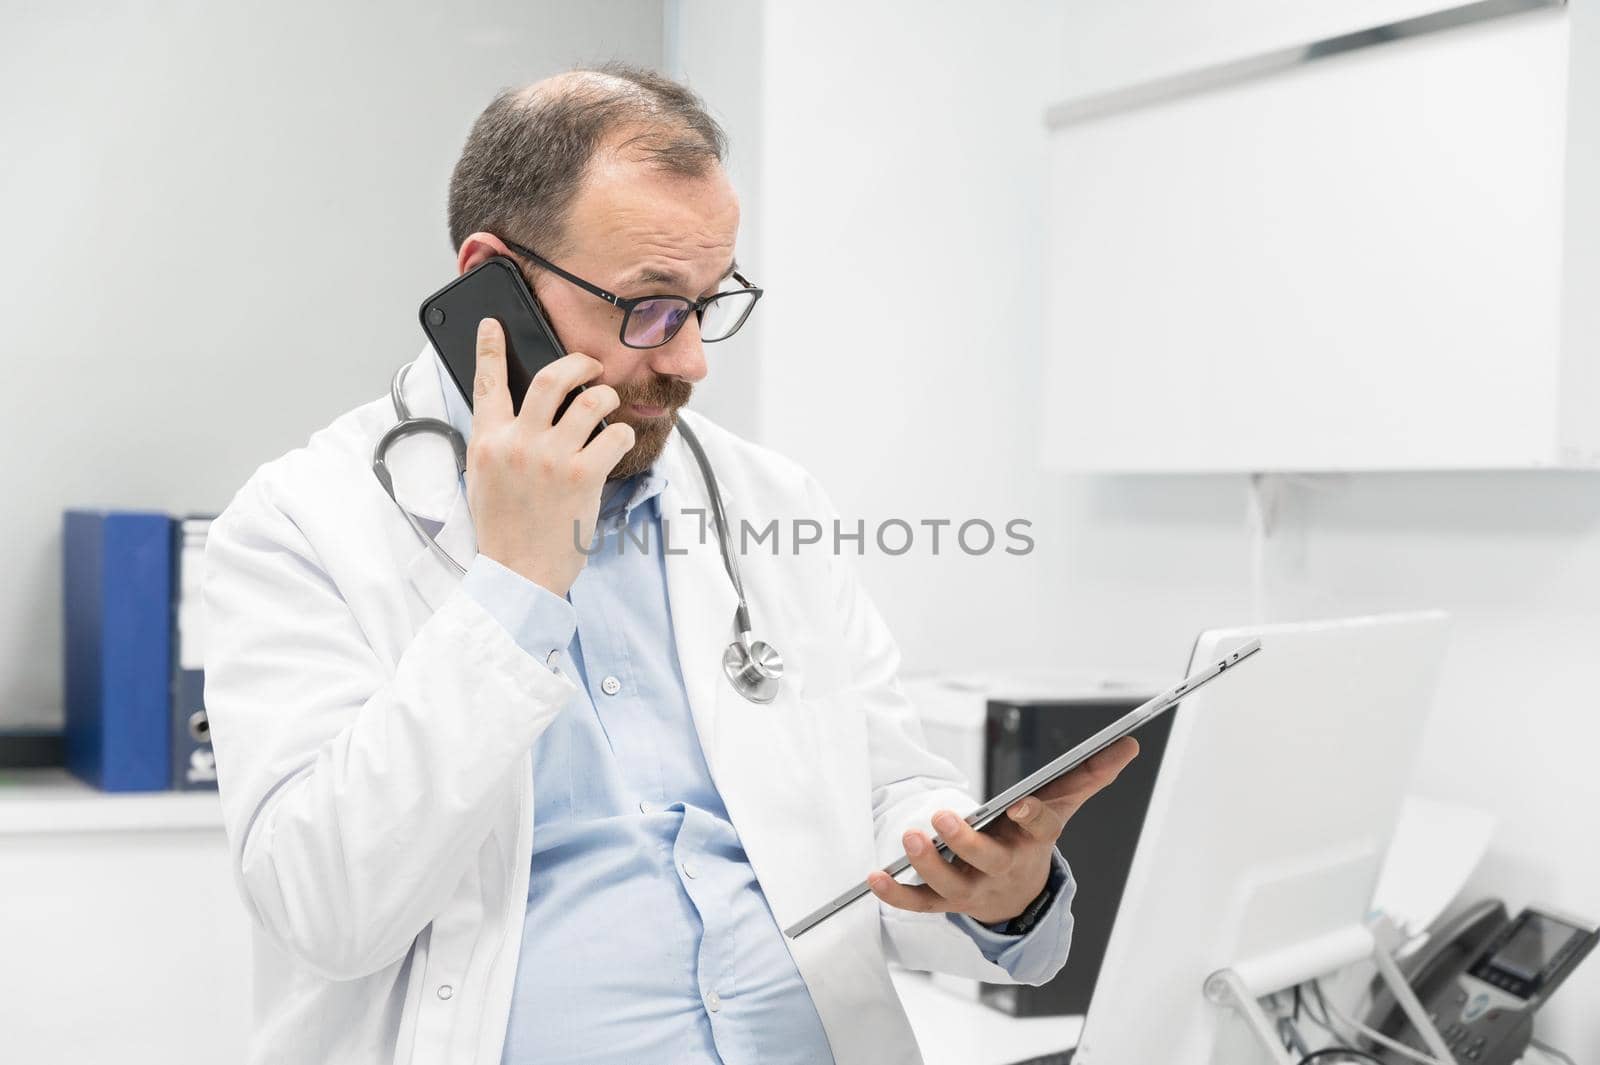 Doctor in office talking on phone by HERRAEZ